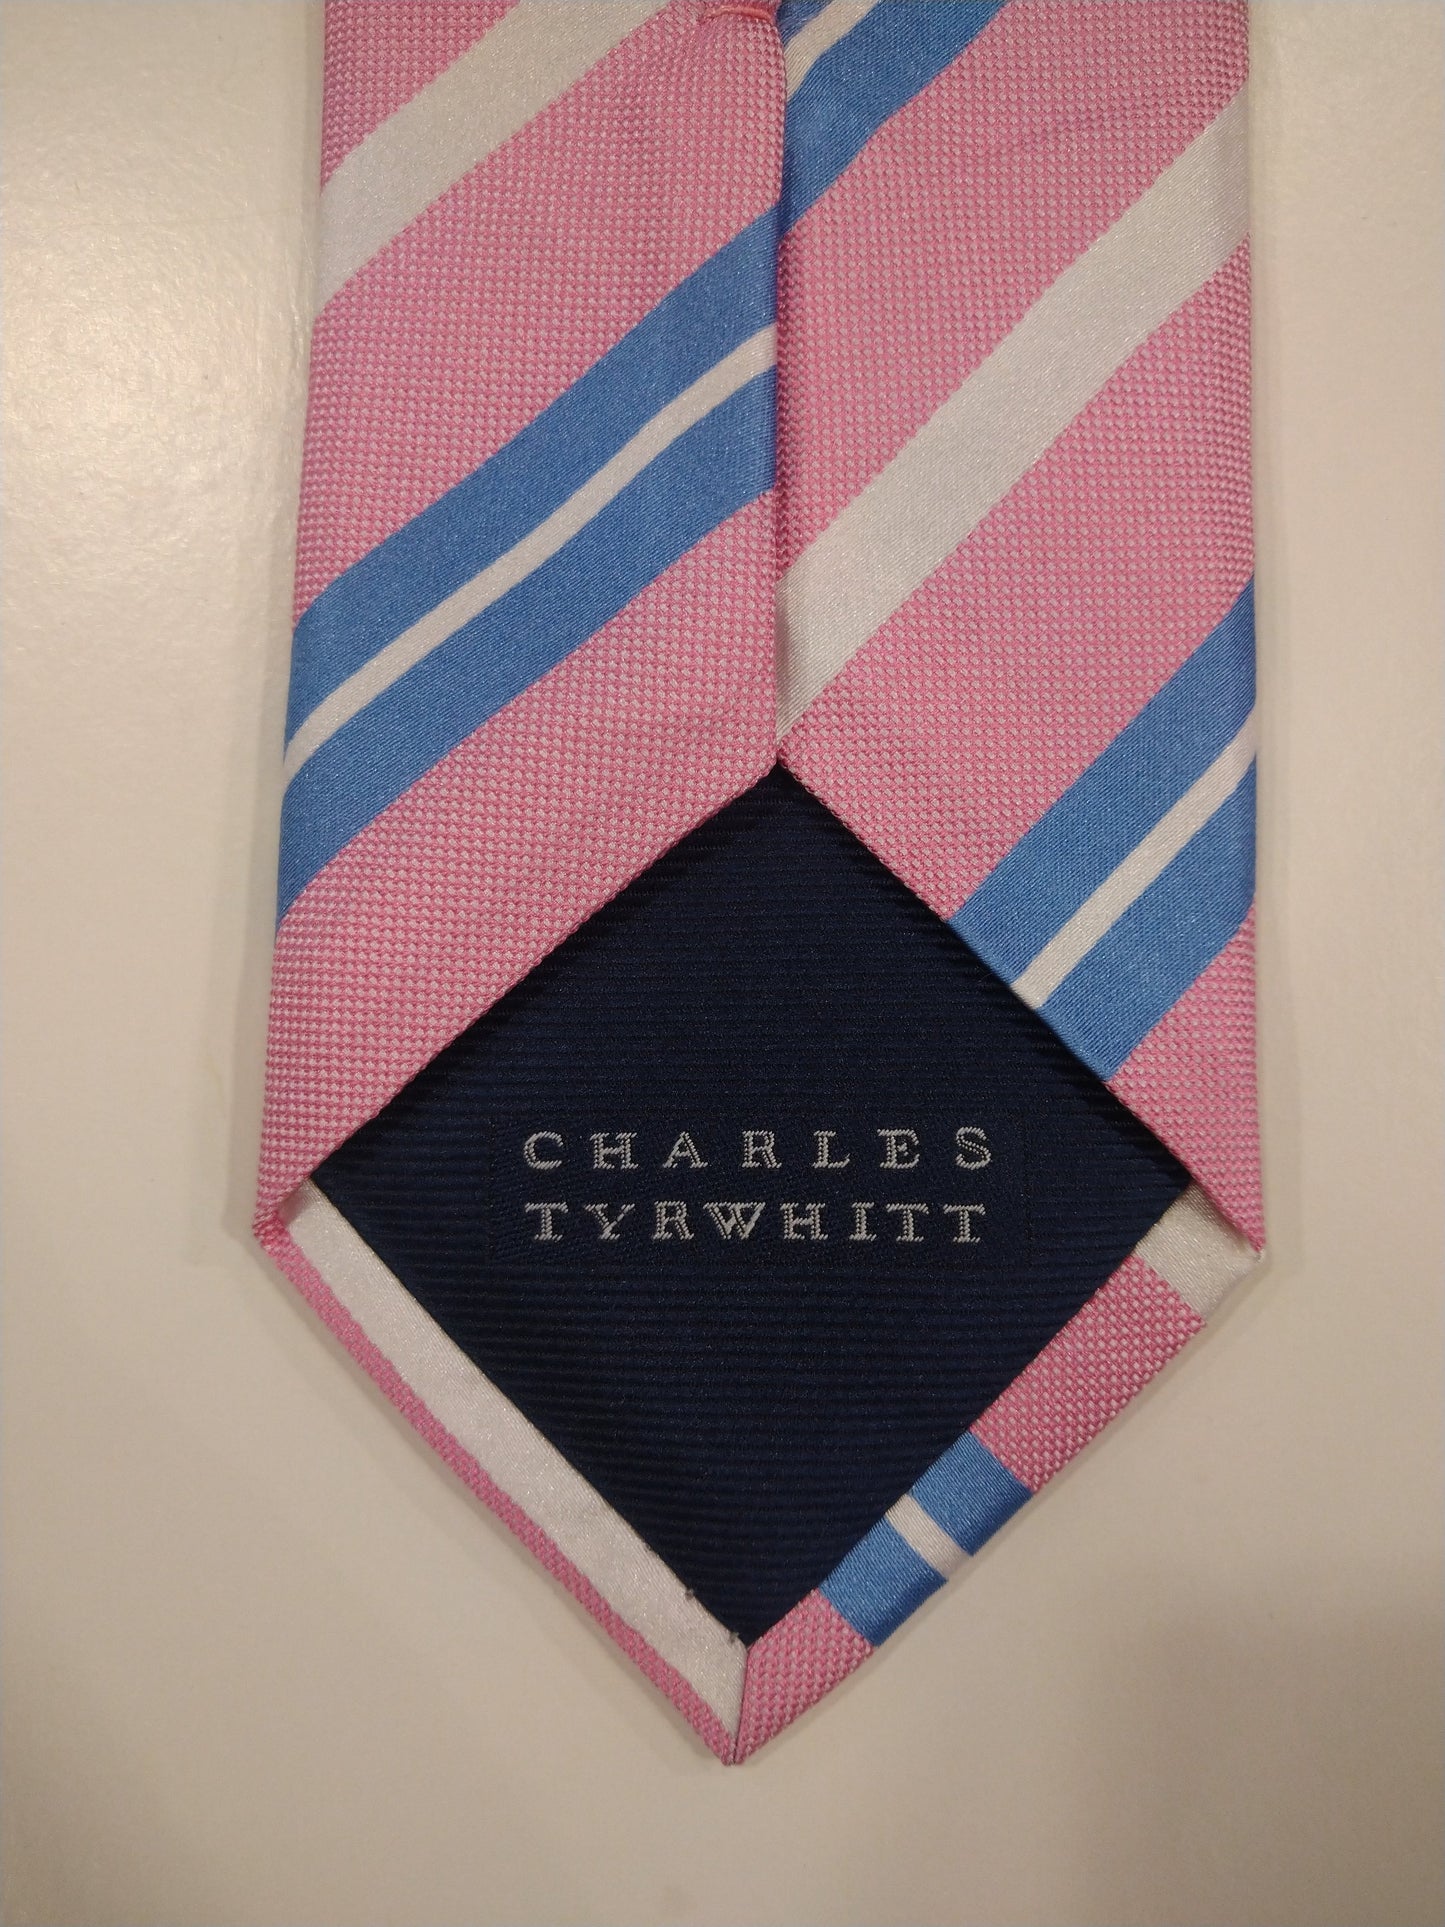 Charles Tyrwhitt Silk Tie. Blanc bleu rose rayé.